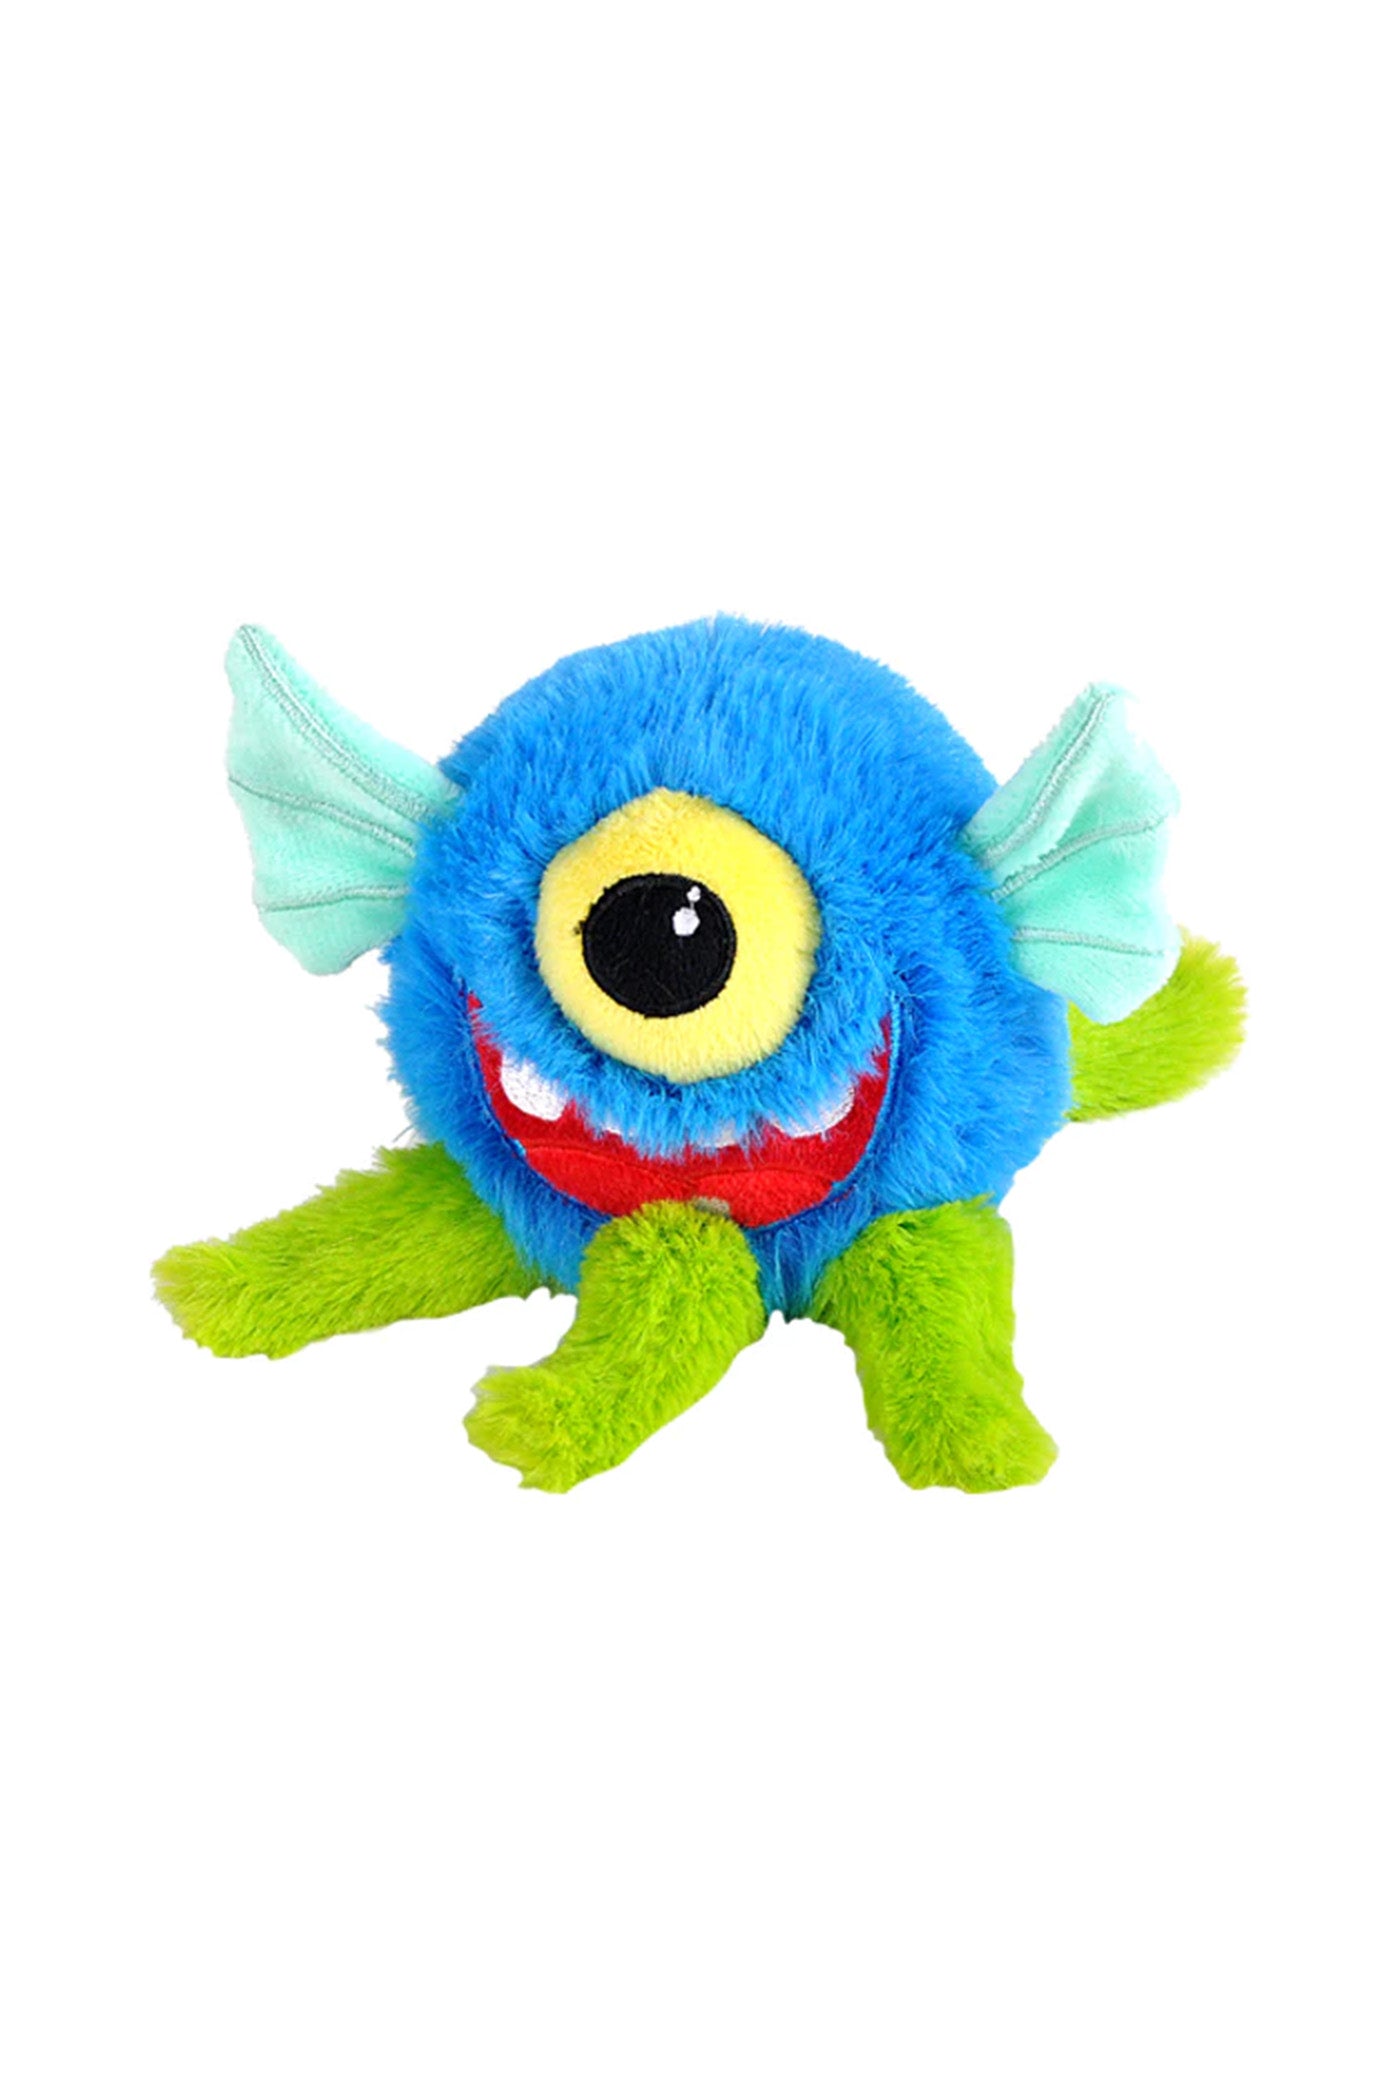 Monsterkins Muck Jr. Stuffed Animal